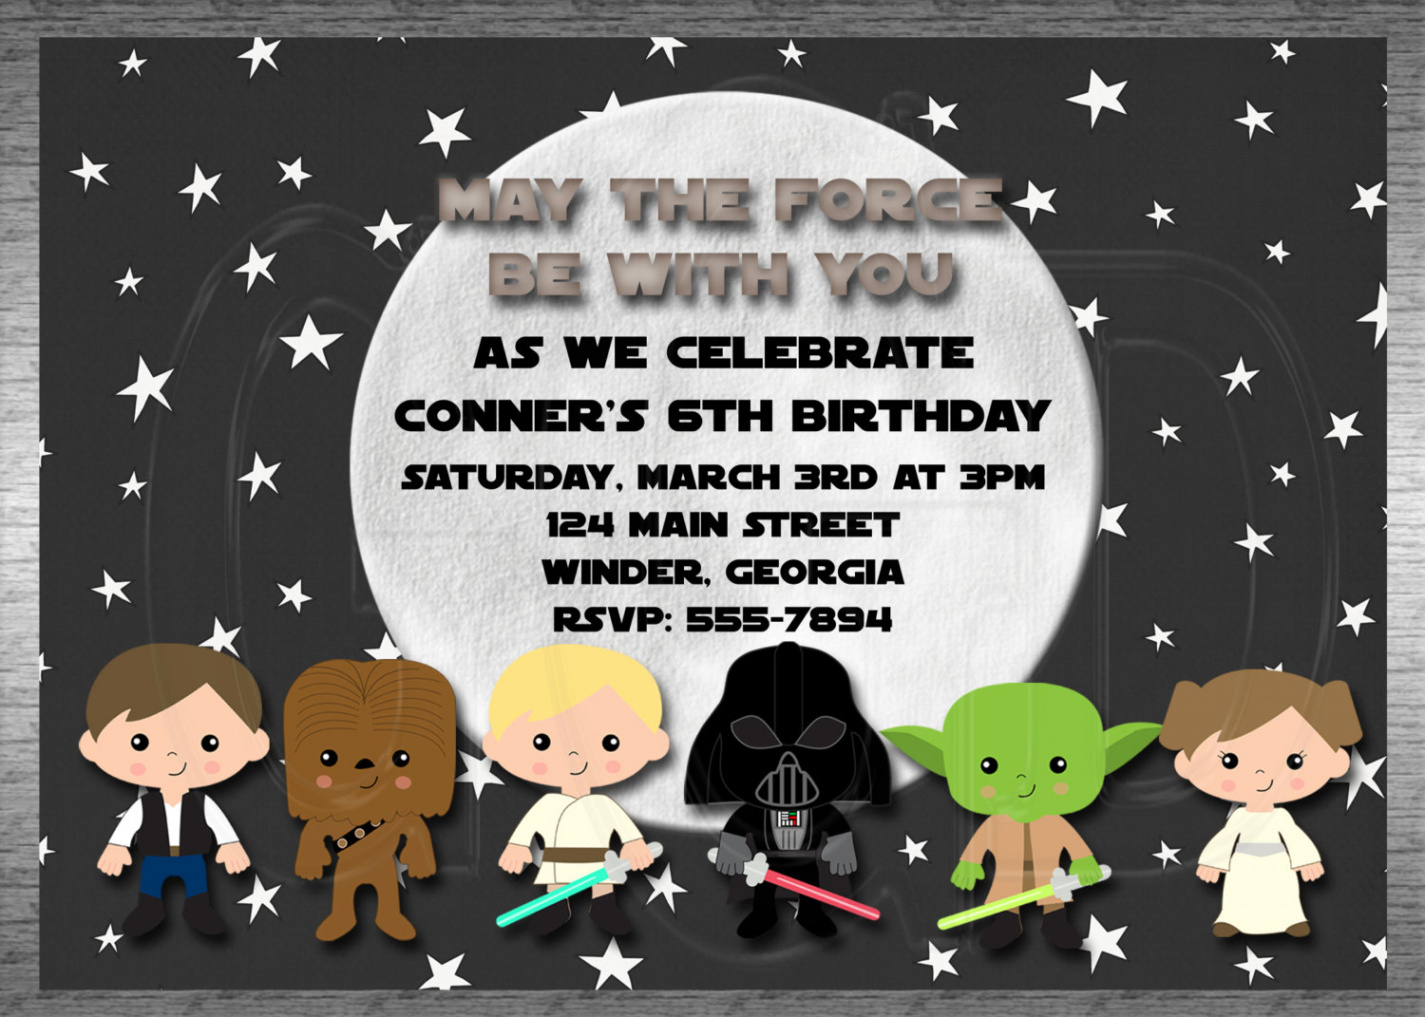 Elegantcustomize 1000 Free Printable Star Wars Baby Shower Invites - Free Printable Star Wars Baby Shower Invites